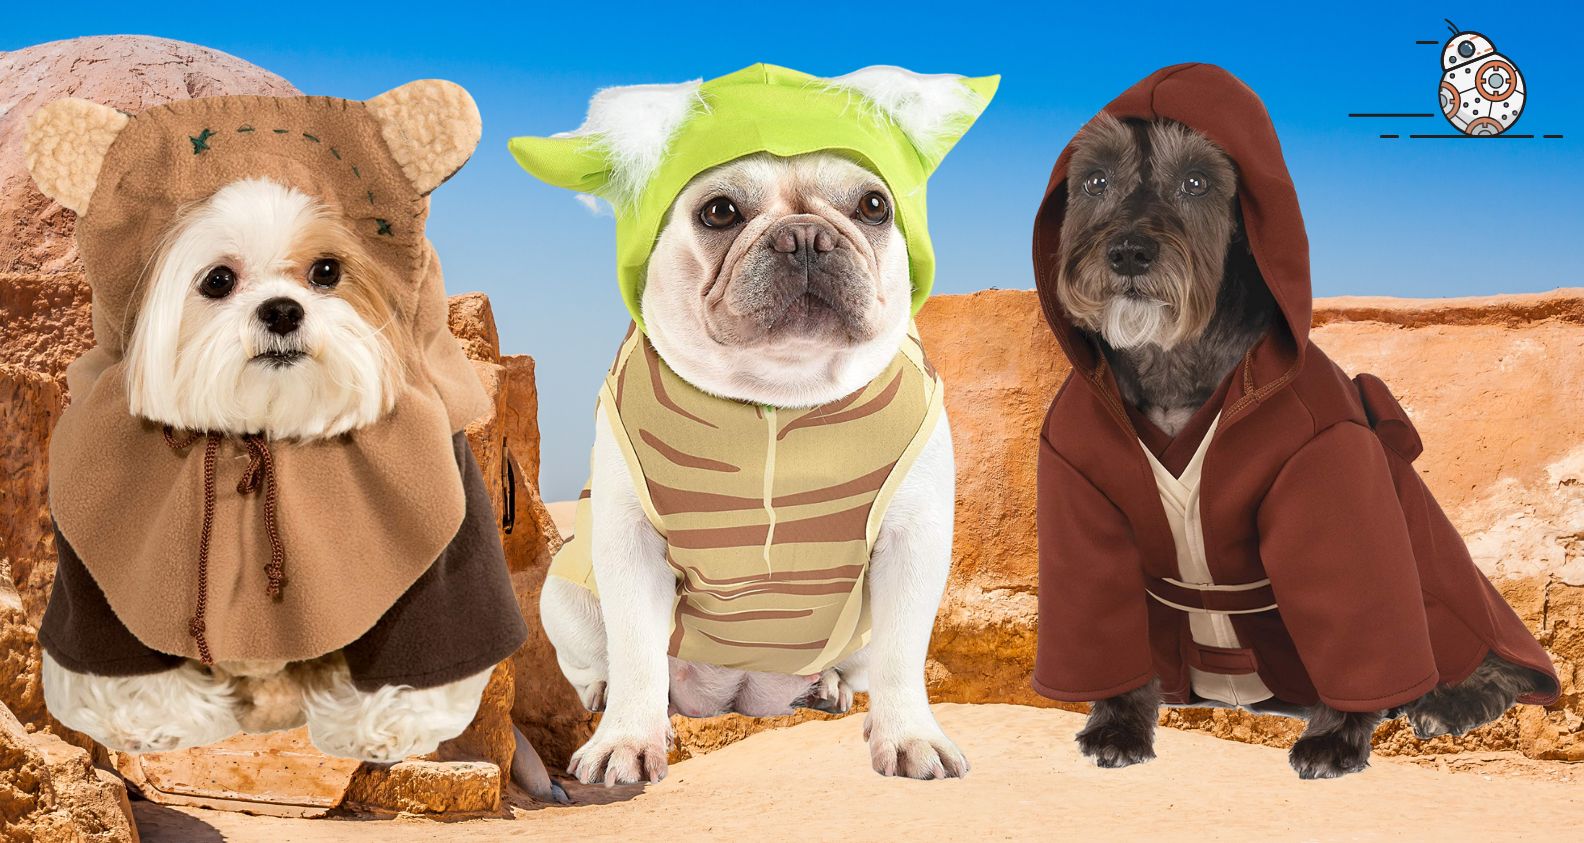 Dog Star Wars Costumes